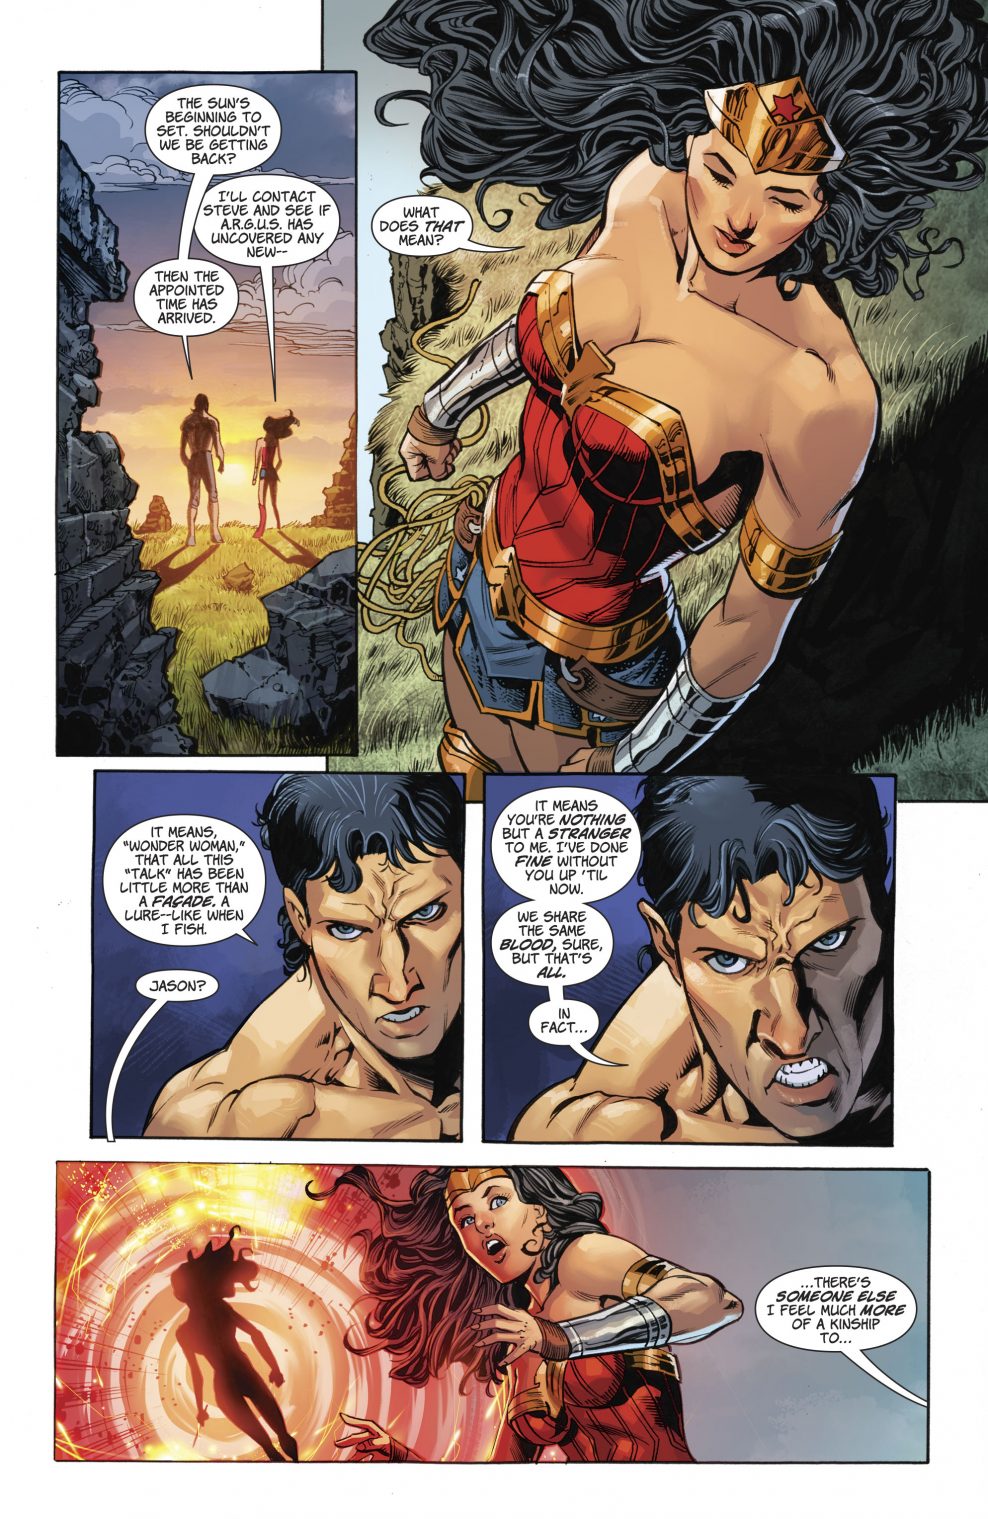 Wonder Woman VS Jason And Grail